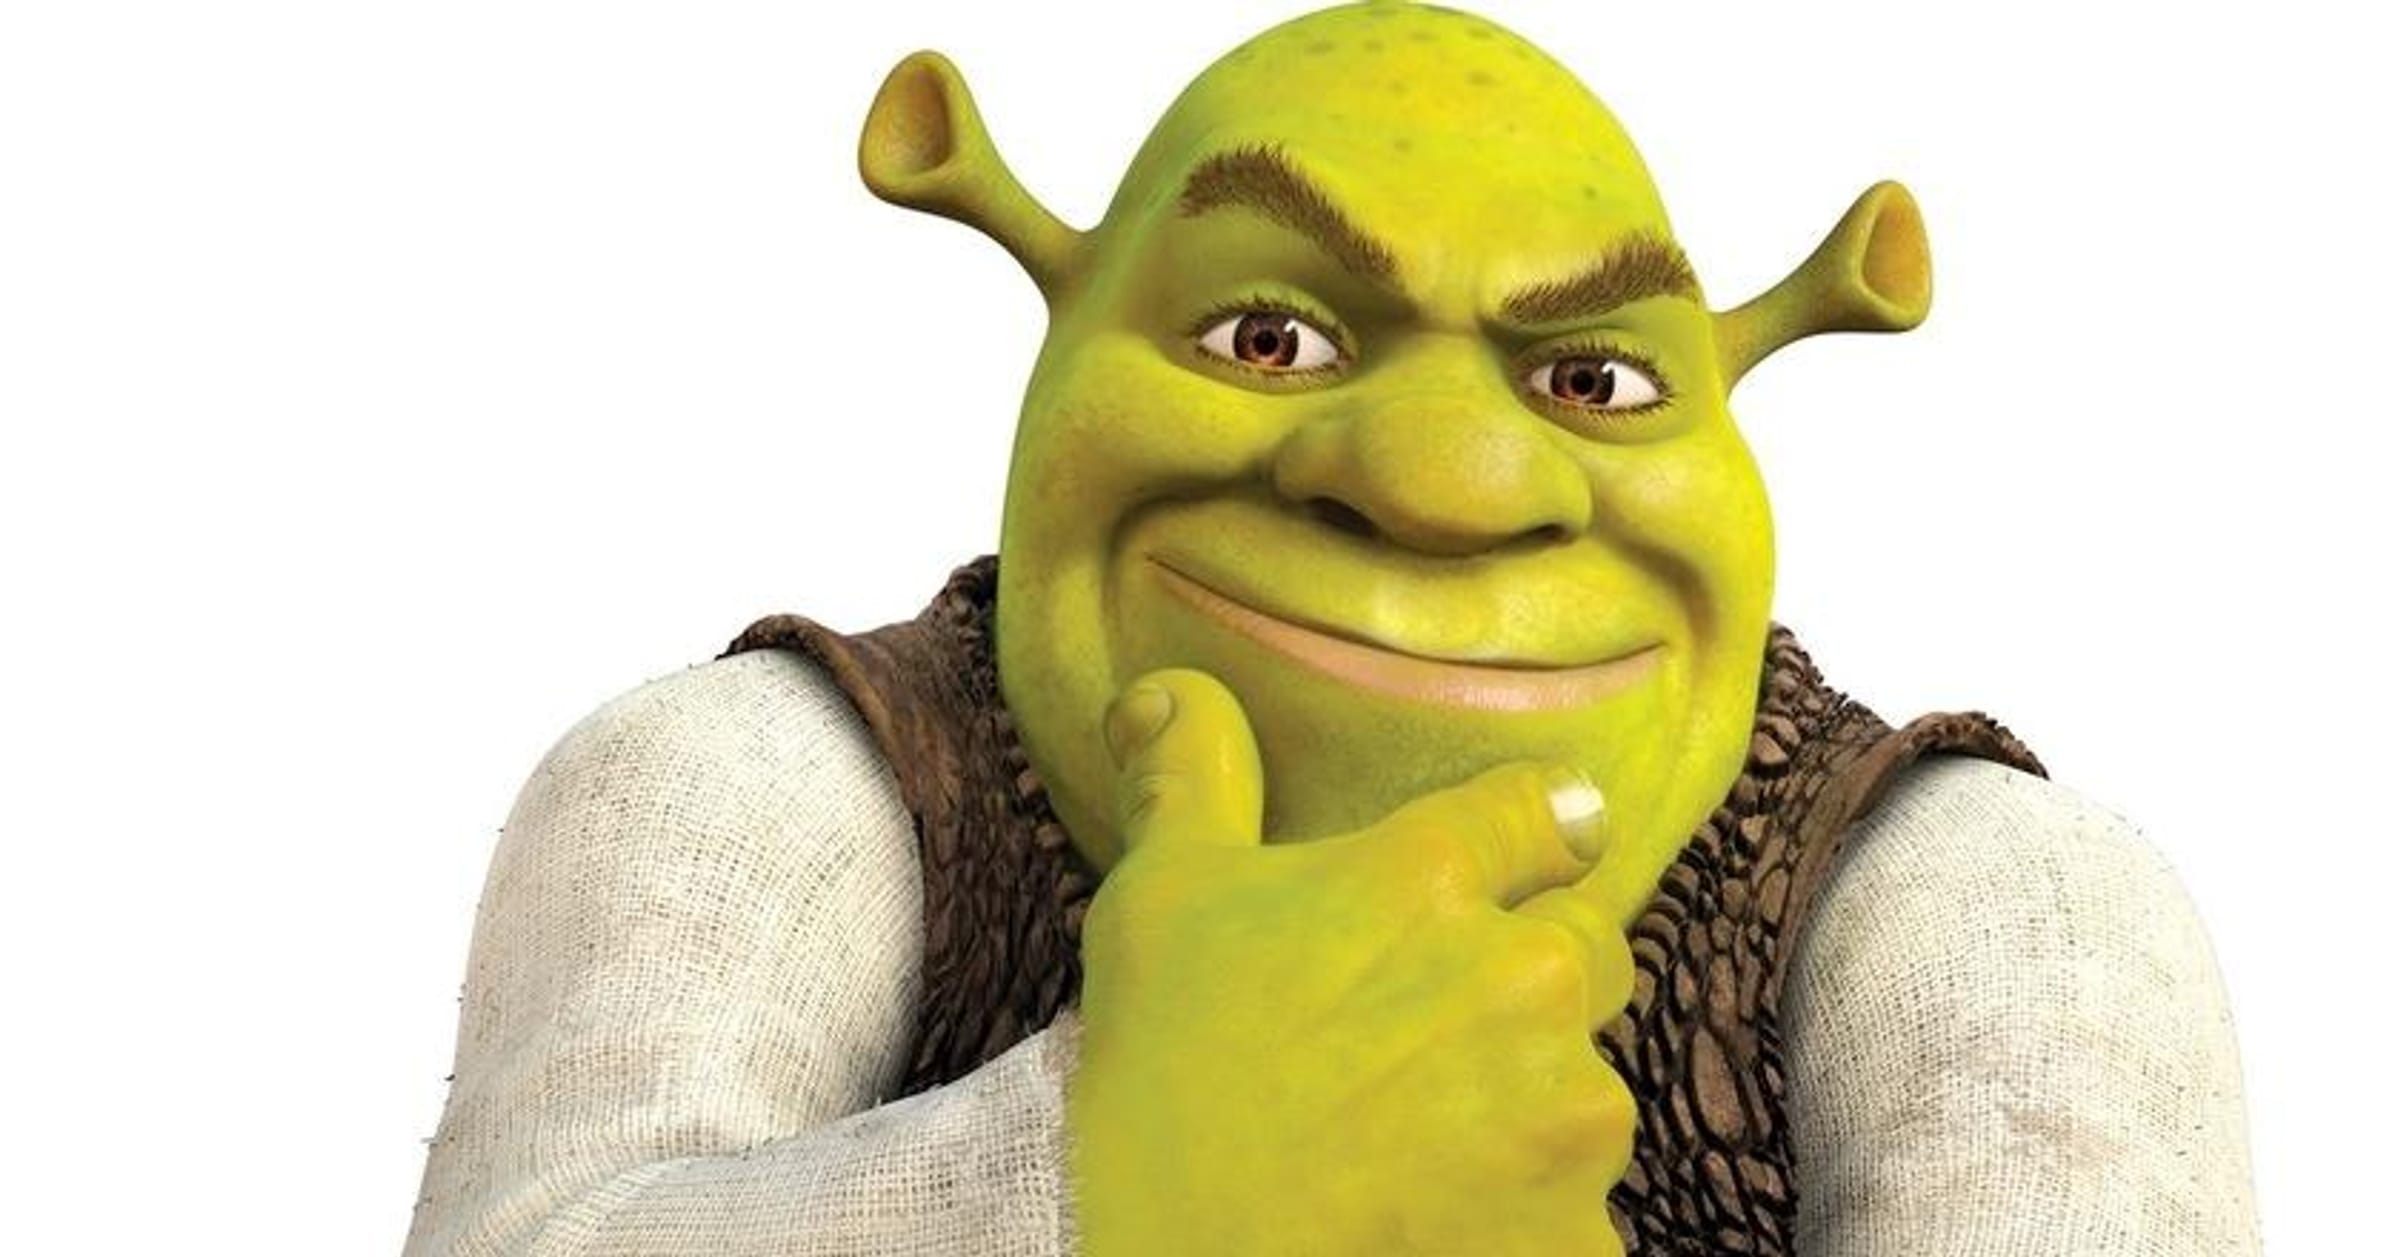 Shrek SuperSlam Princess Fiona Shrek The Musical Shrek Film Series PNG -  cartoon, cartoons, donkey, fictional character, …